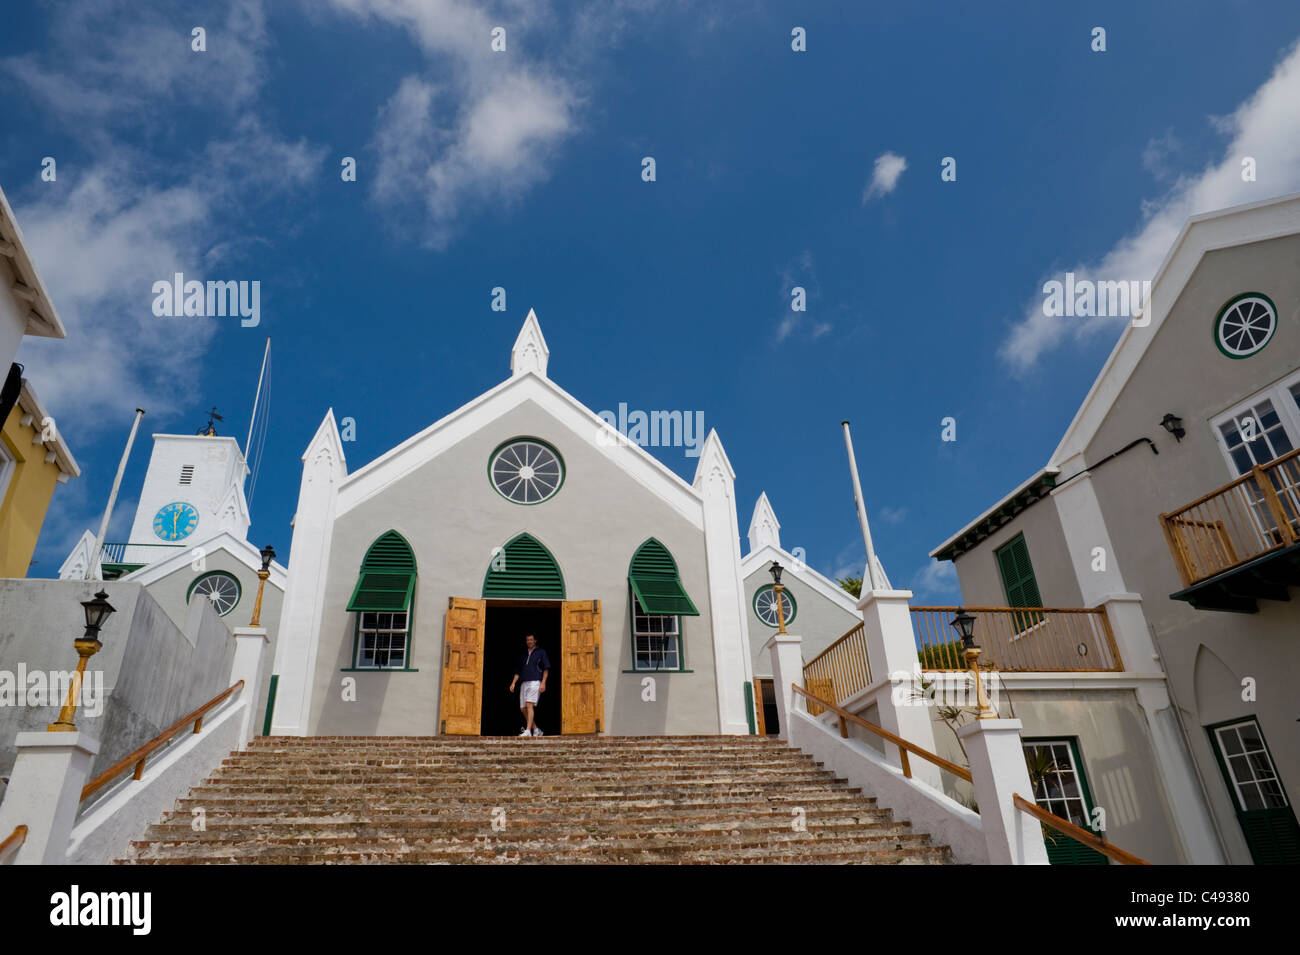 A man walks in the doorway of St. Peter's church, St. George, Bermuda. Stock Photo